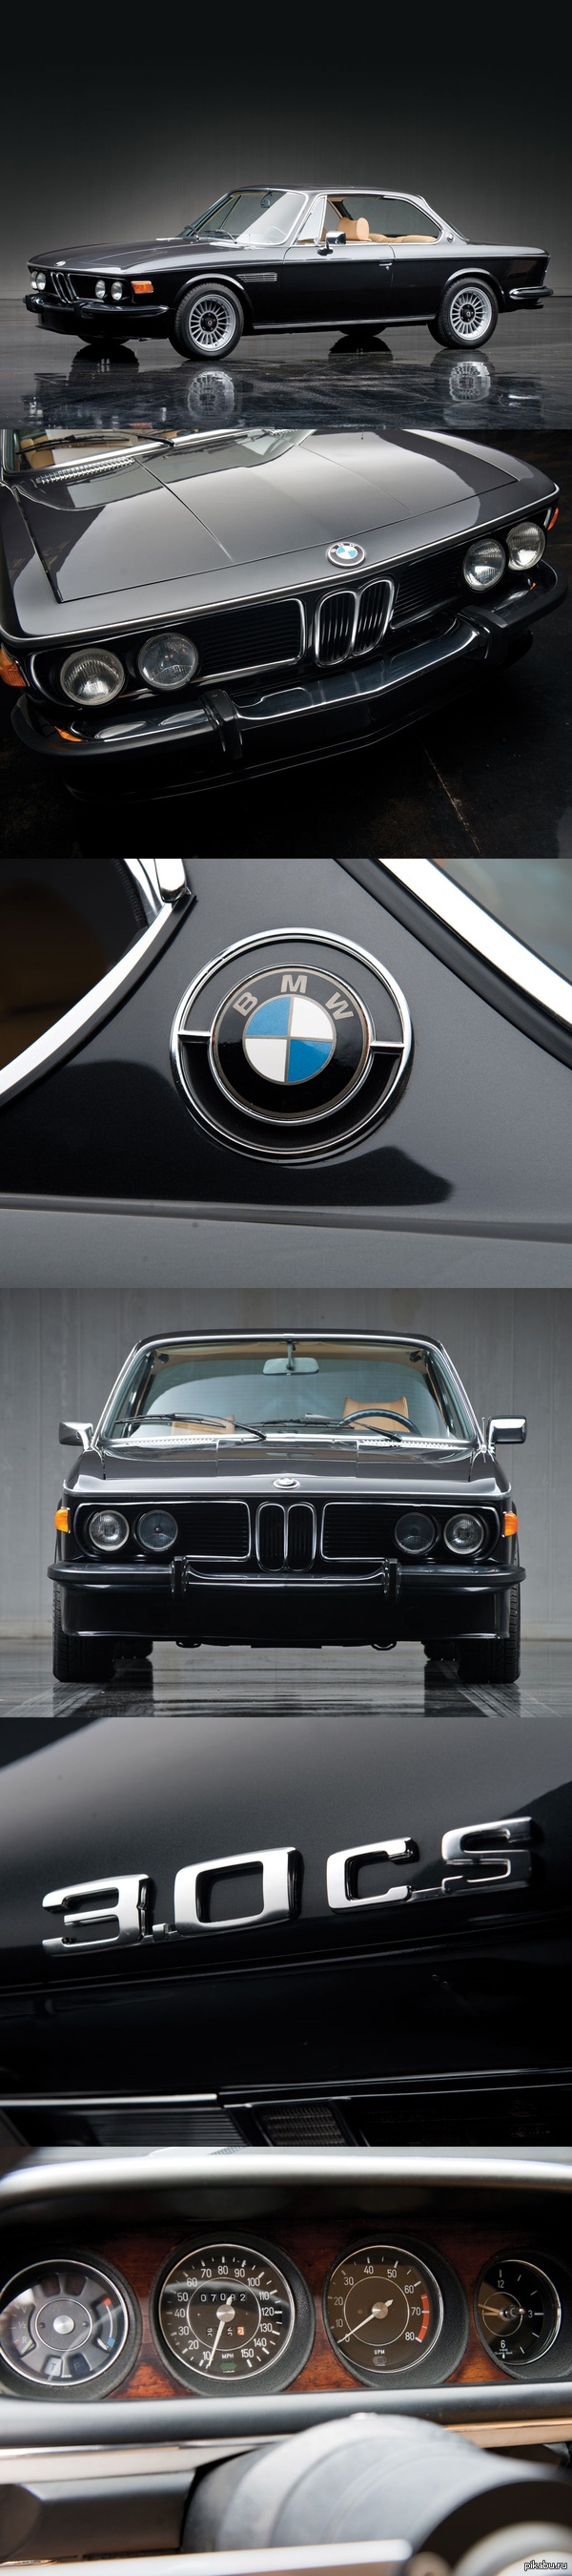  1974 BMW 3.0